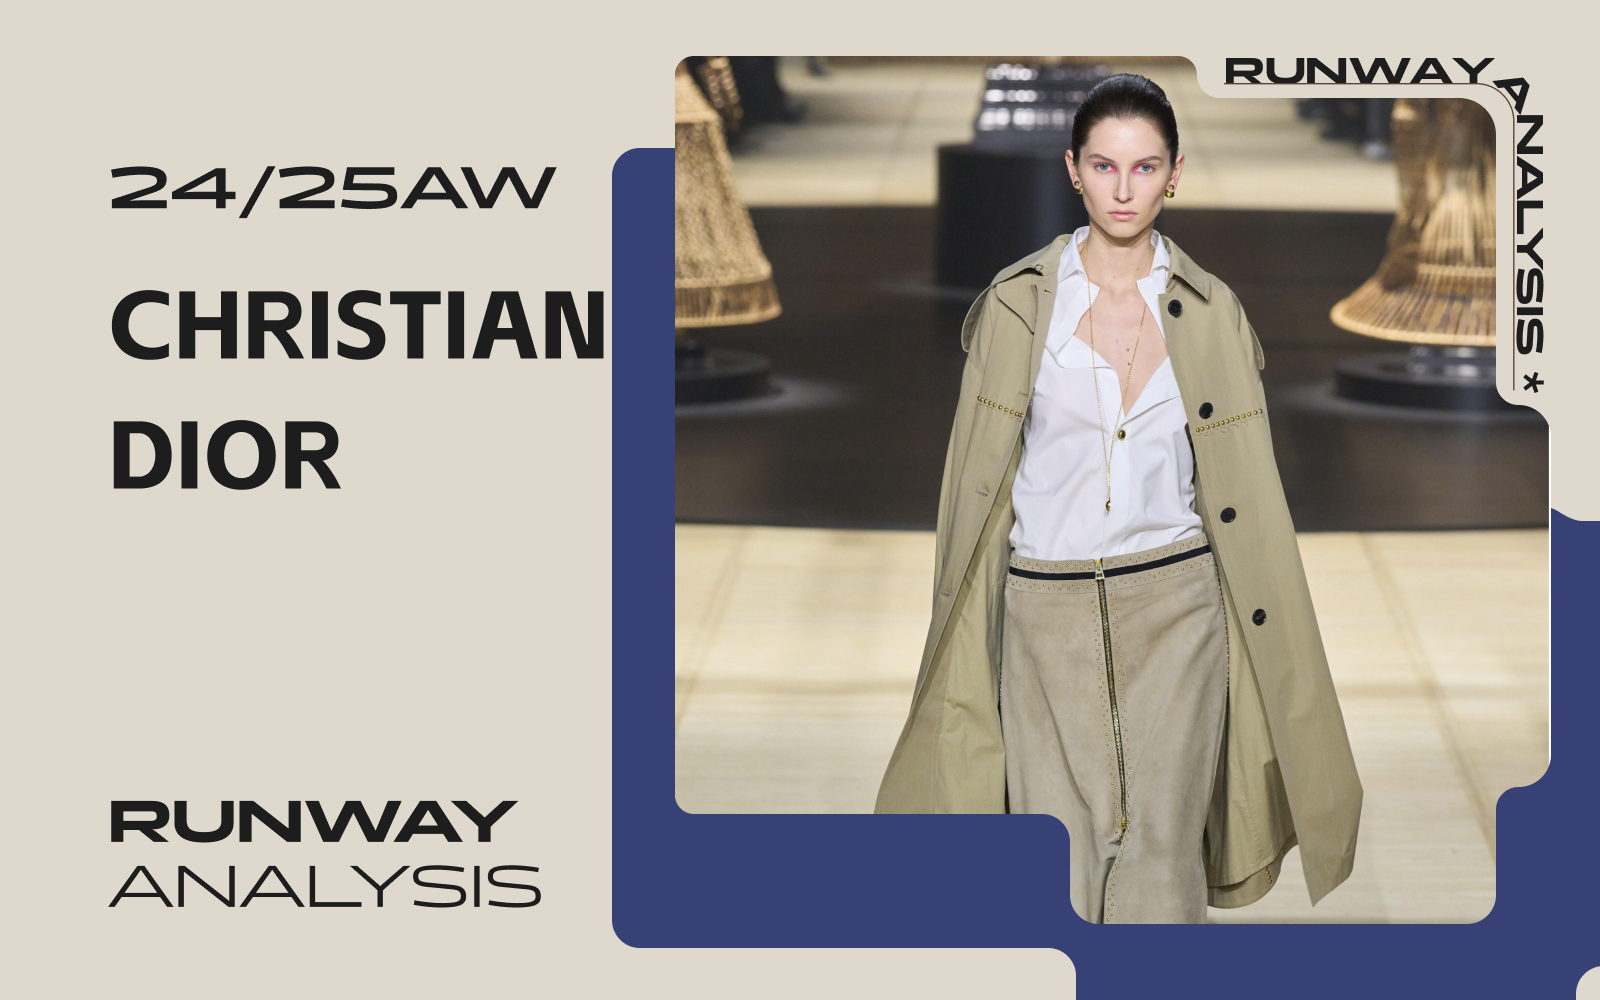 Retro Elegance -- The Women's Runway Analysis of Christian Dior